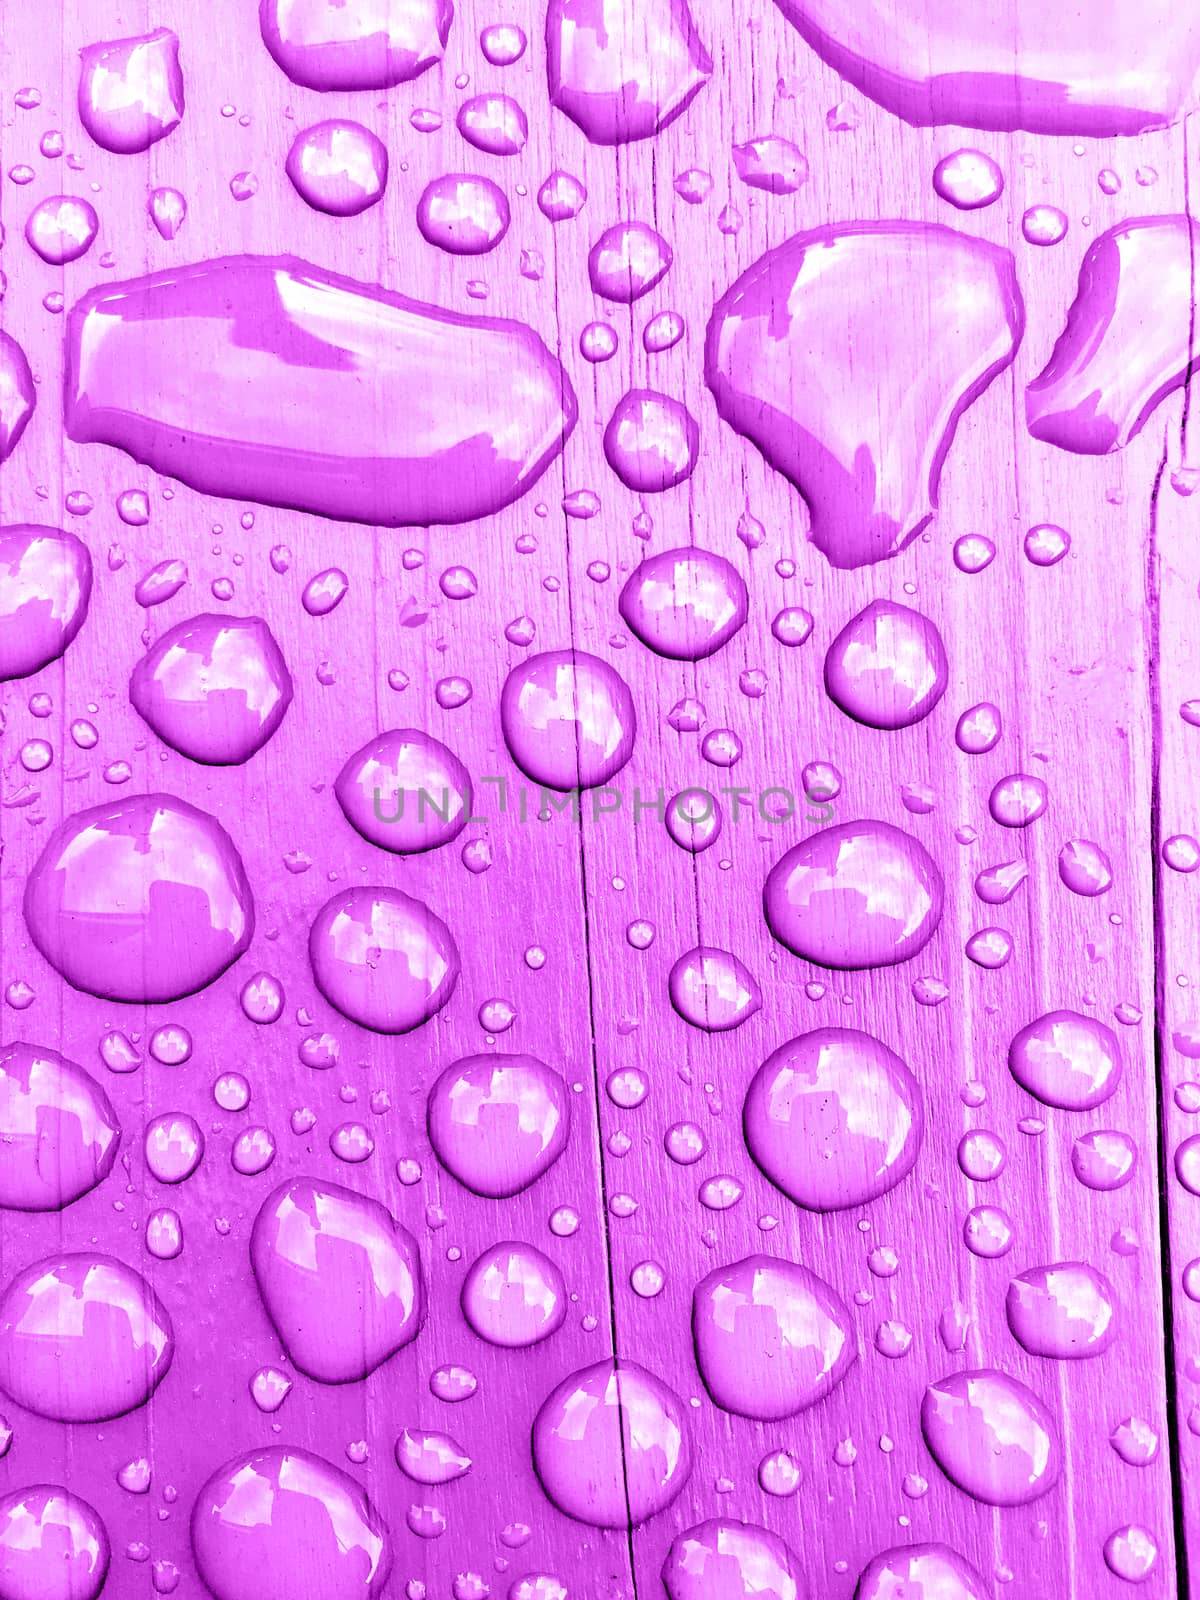 rain drops on on purple wooden bench